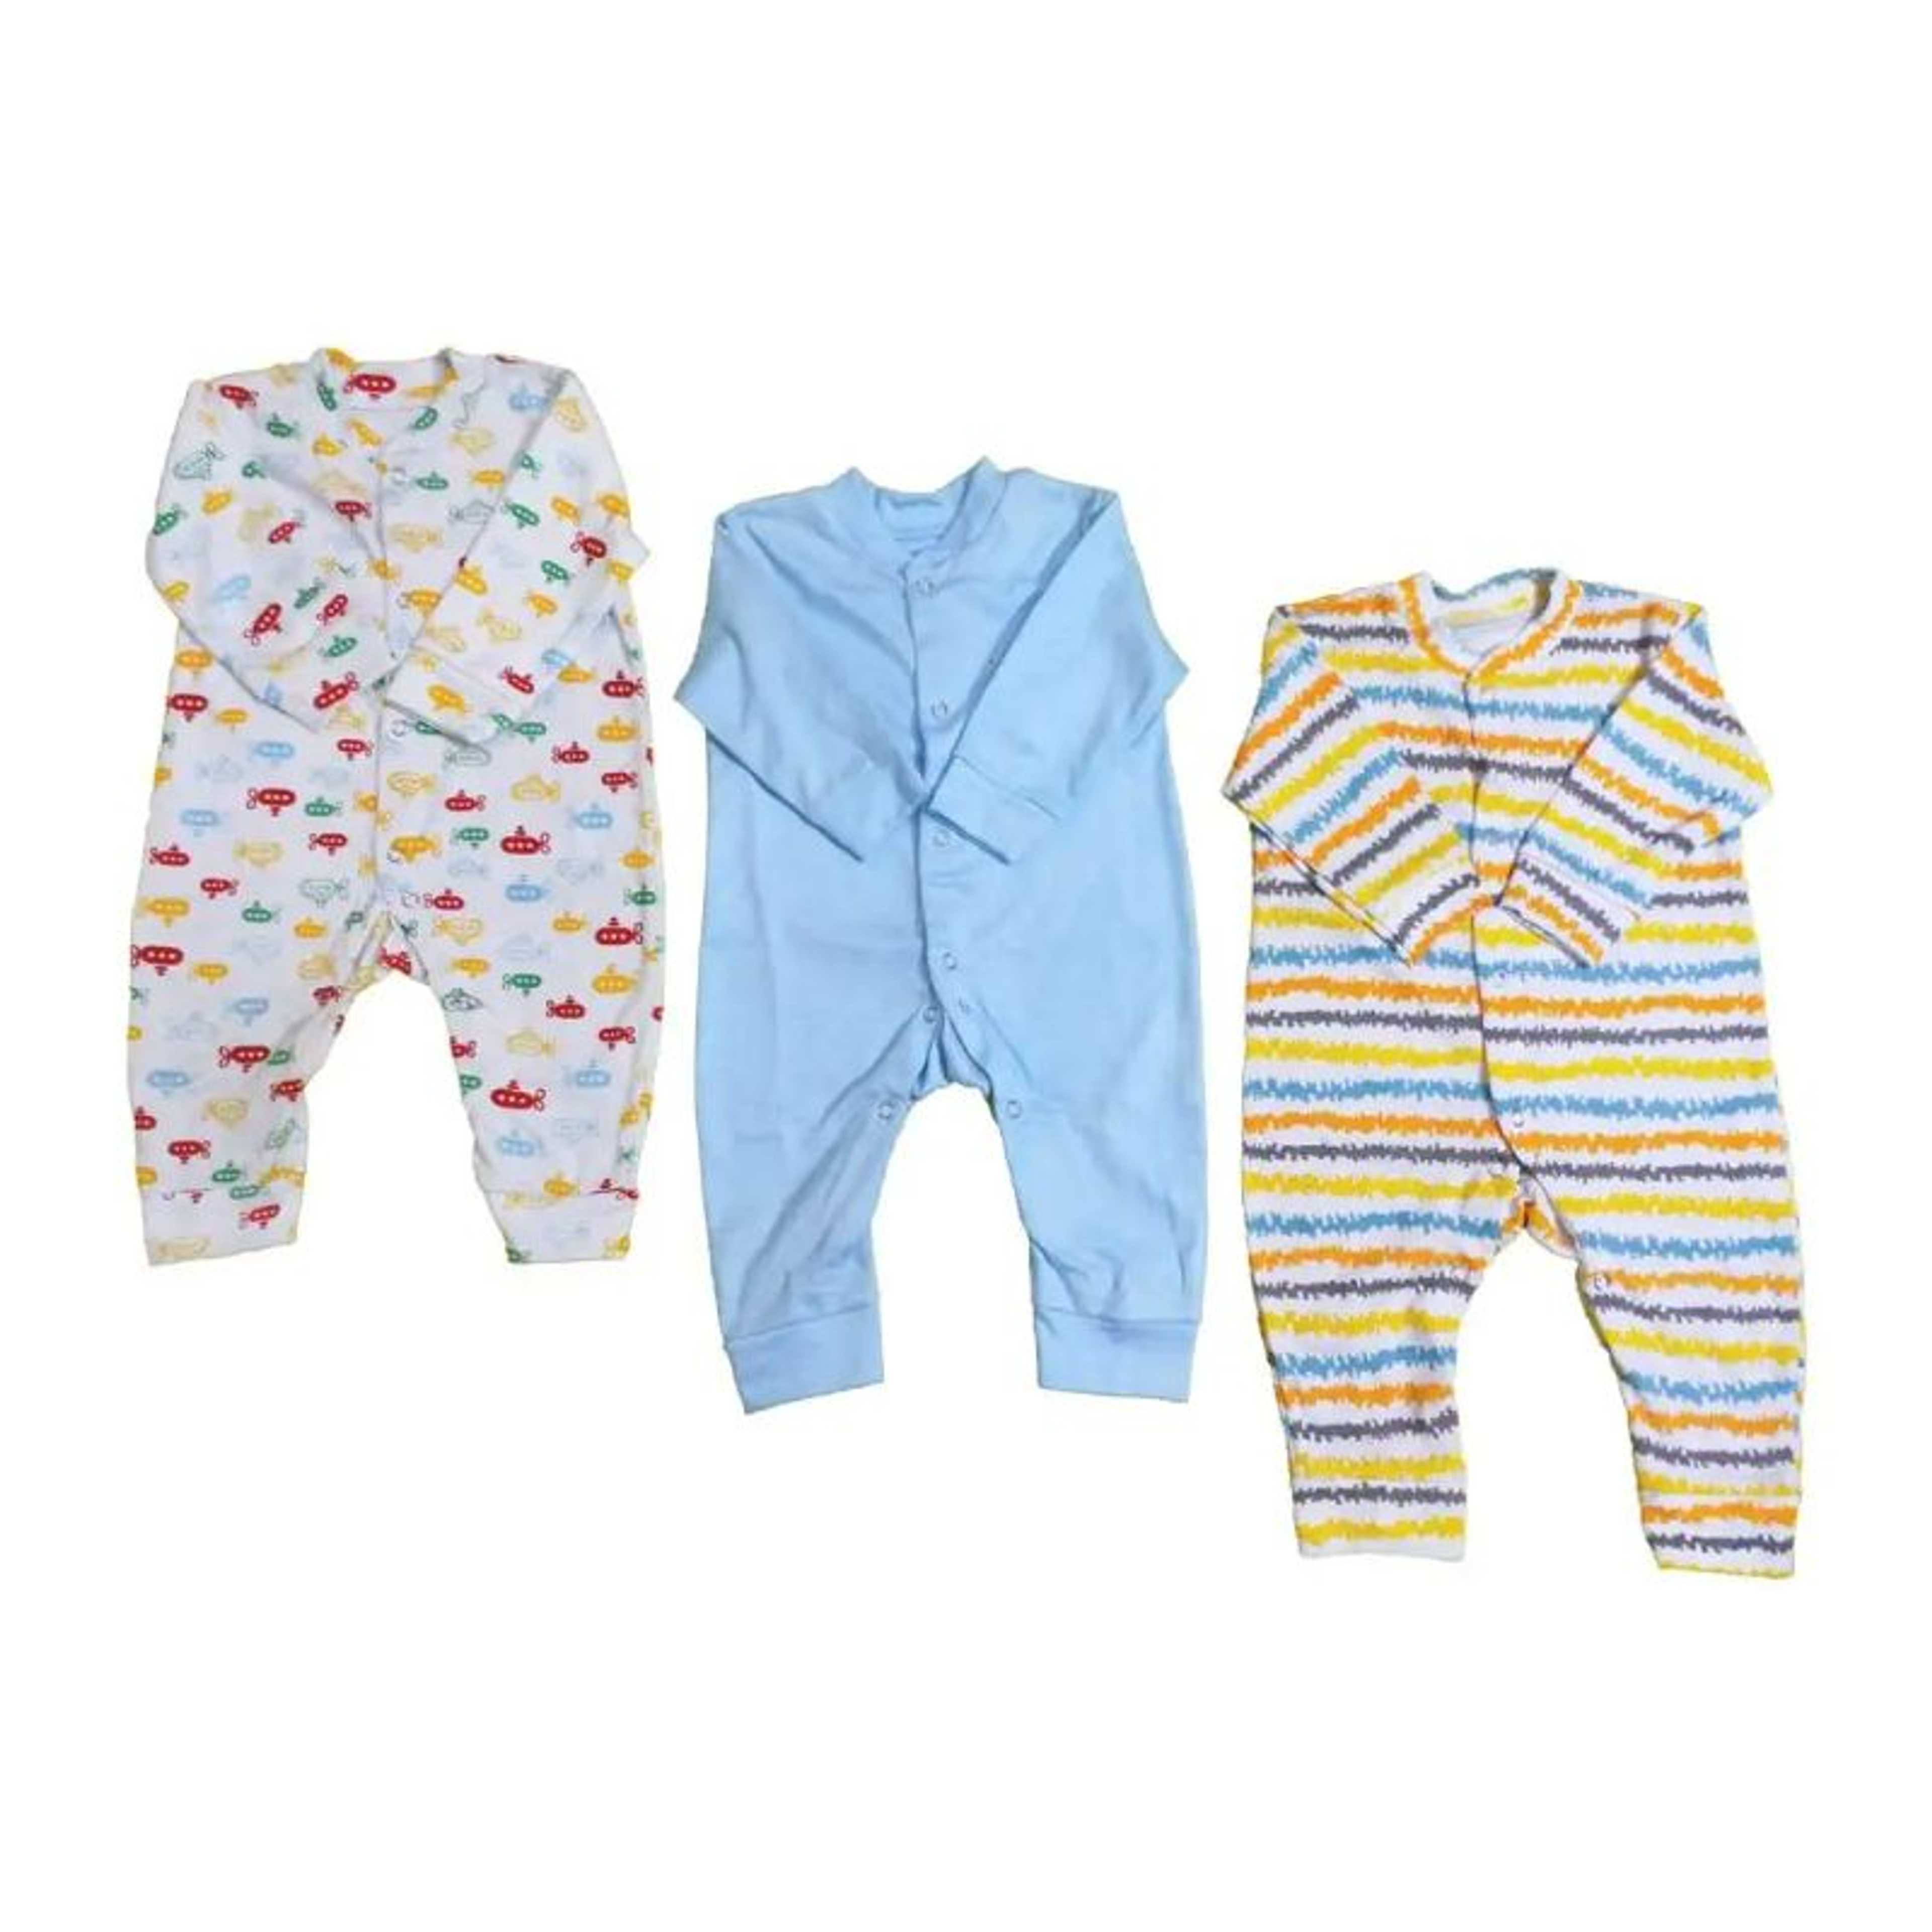 Premium Unisex baby Body Suits set of three
